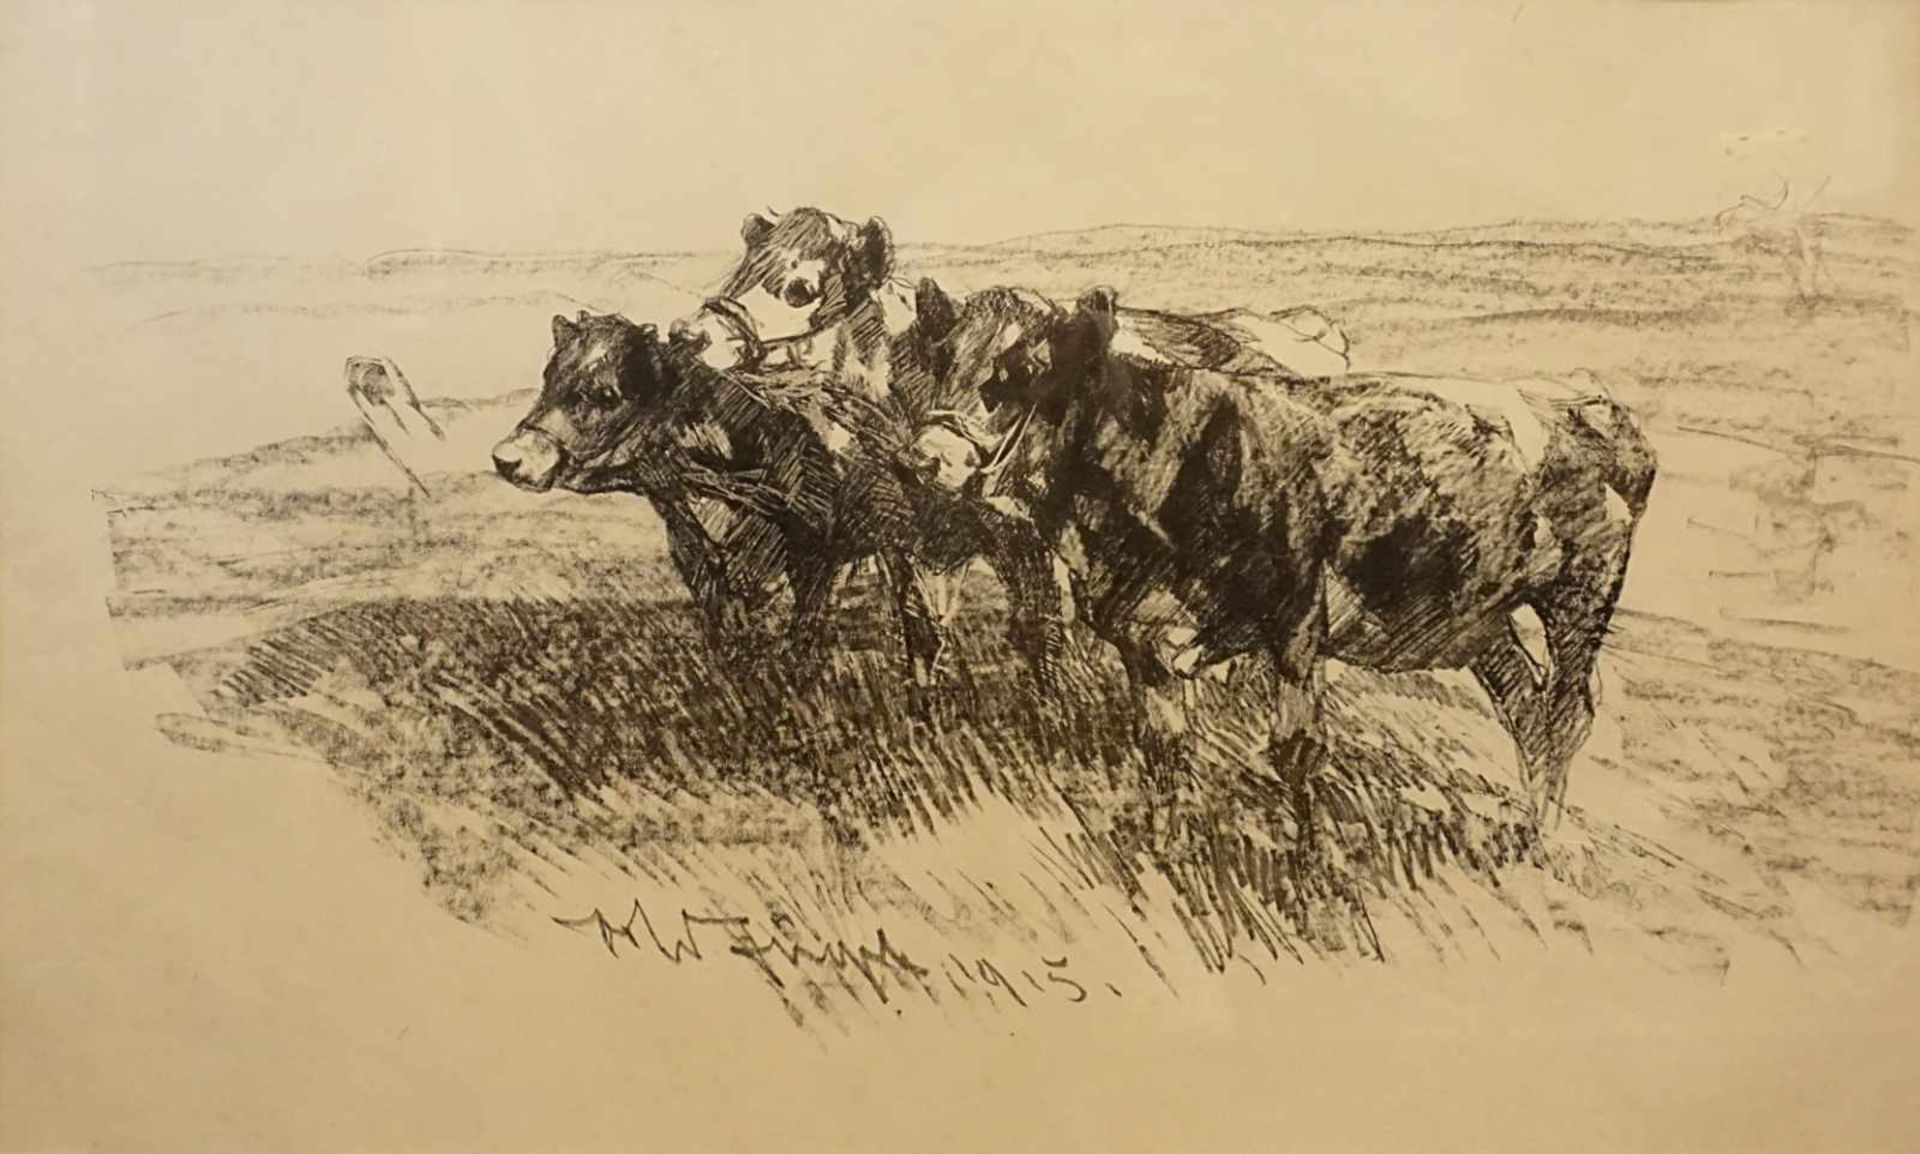 1 Grafik "Kühe auf der Weide" in Platte M.u. bez. W ZÜGEL,